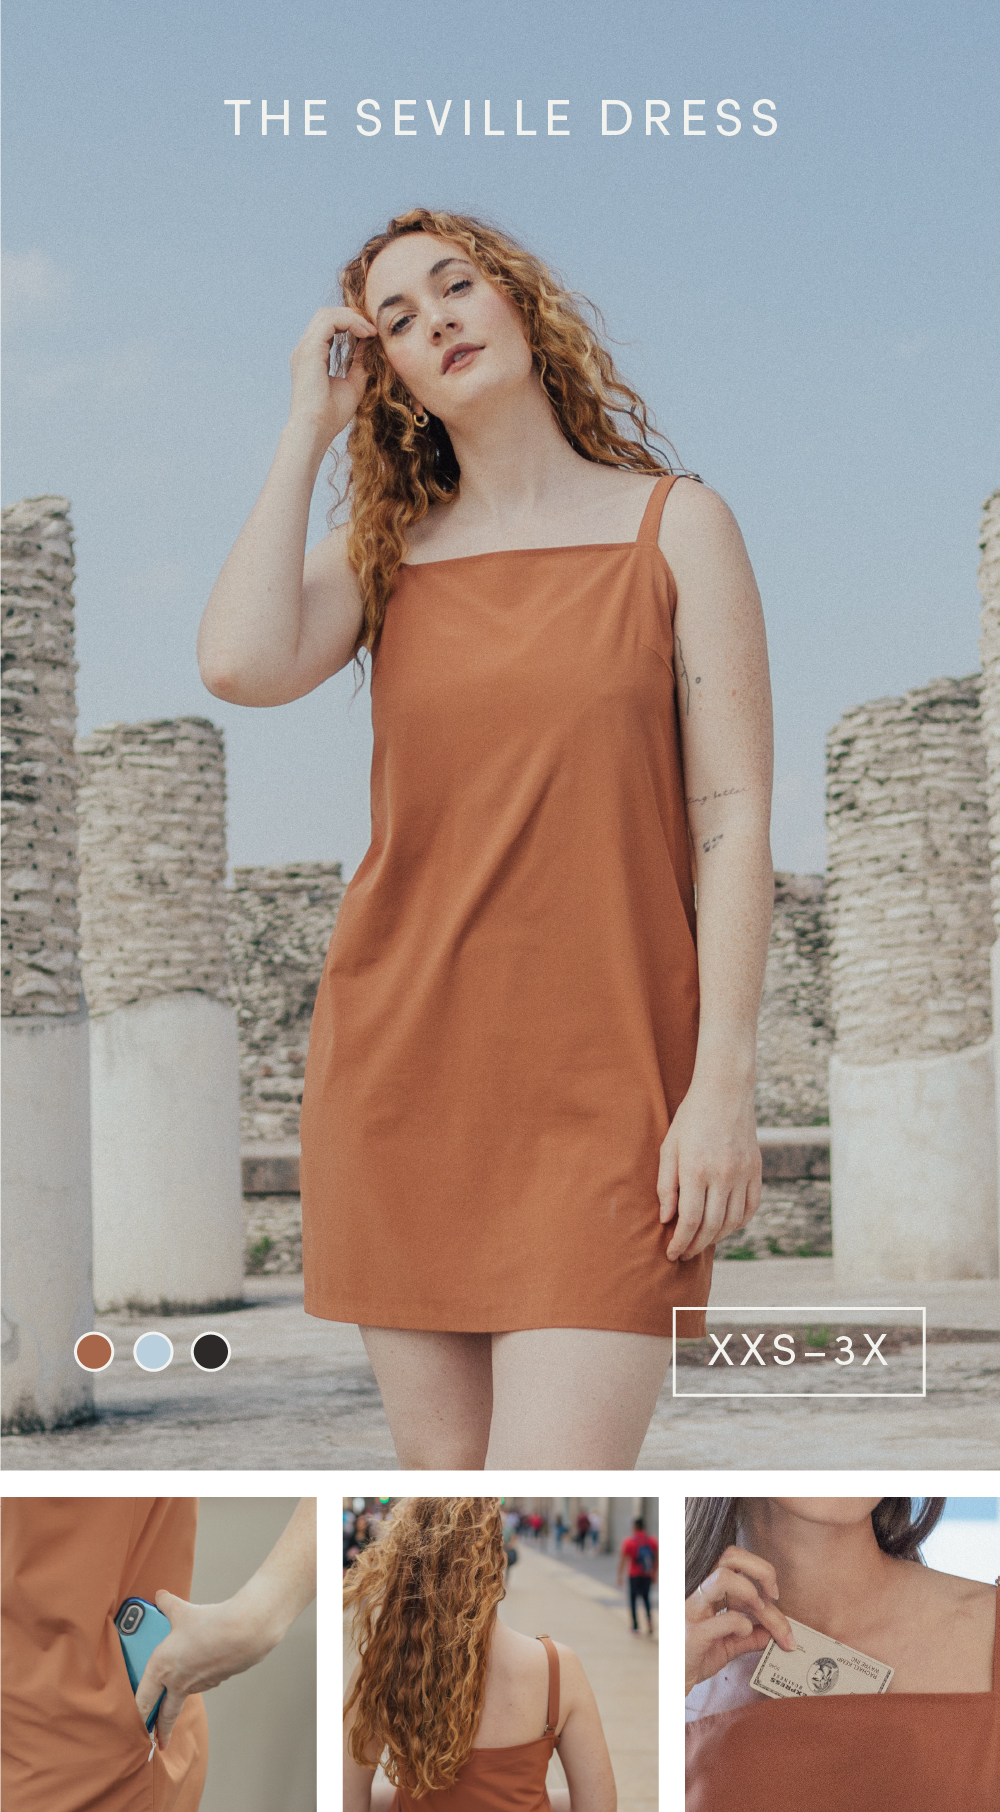 Wayre-Kickstarter_Three-Styles-Seville-Dress-1.jpg